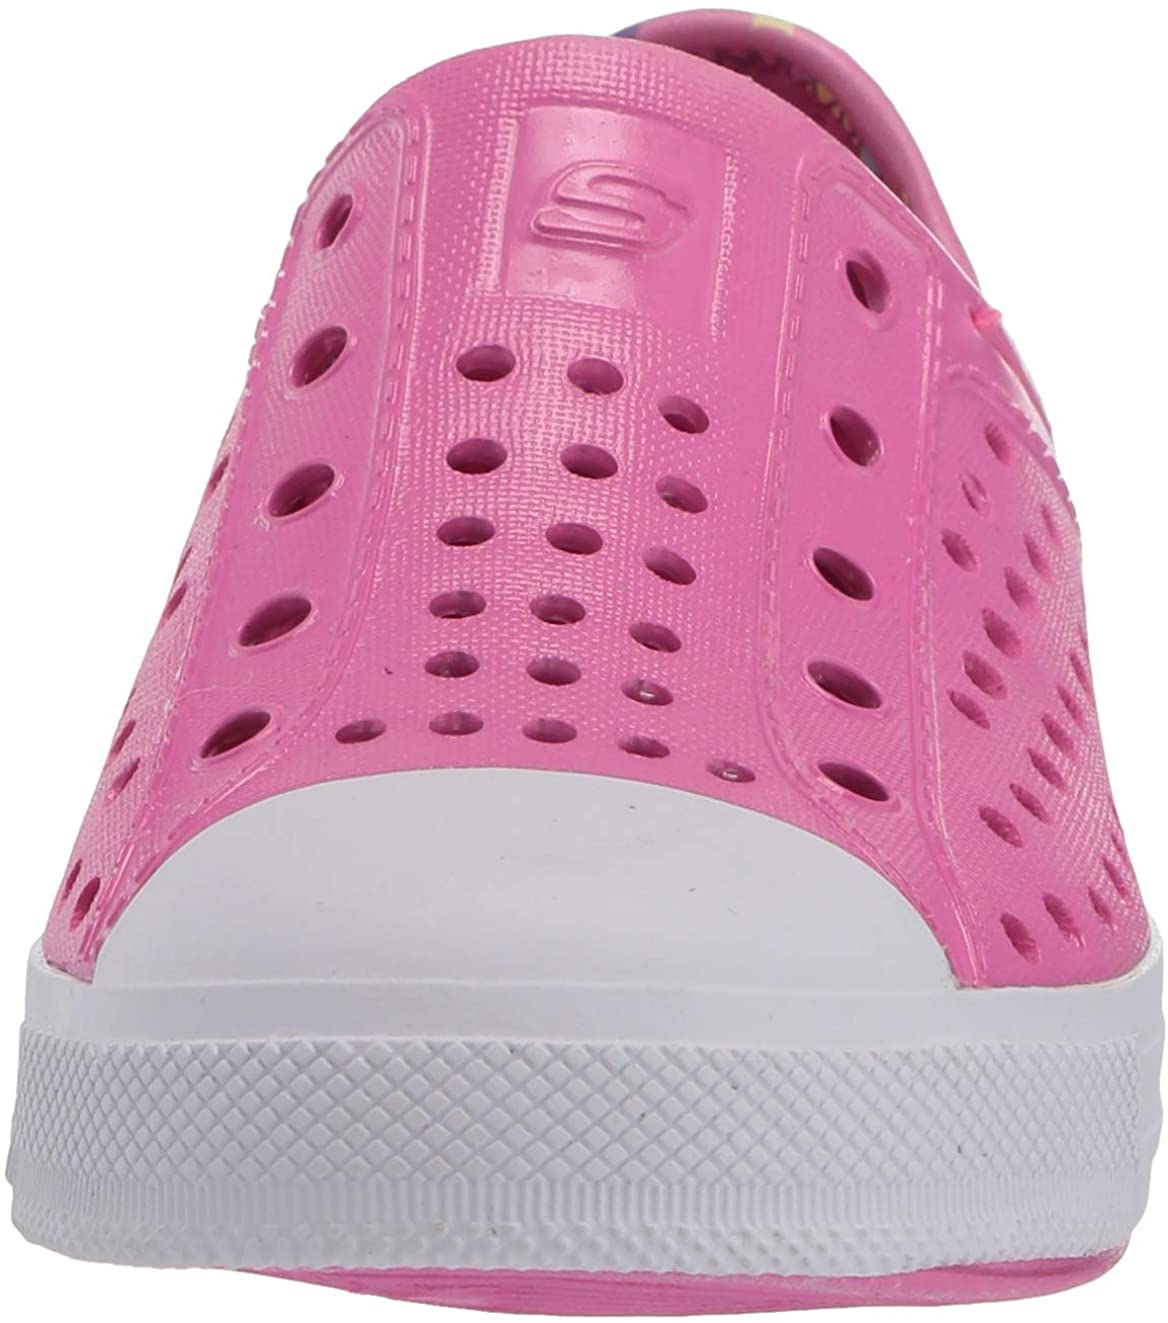 Skechers Children Shoes Cali gear Rubber, Hot Pink, Size 0.0 6luh | eBay